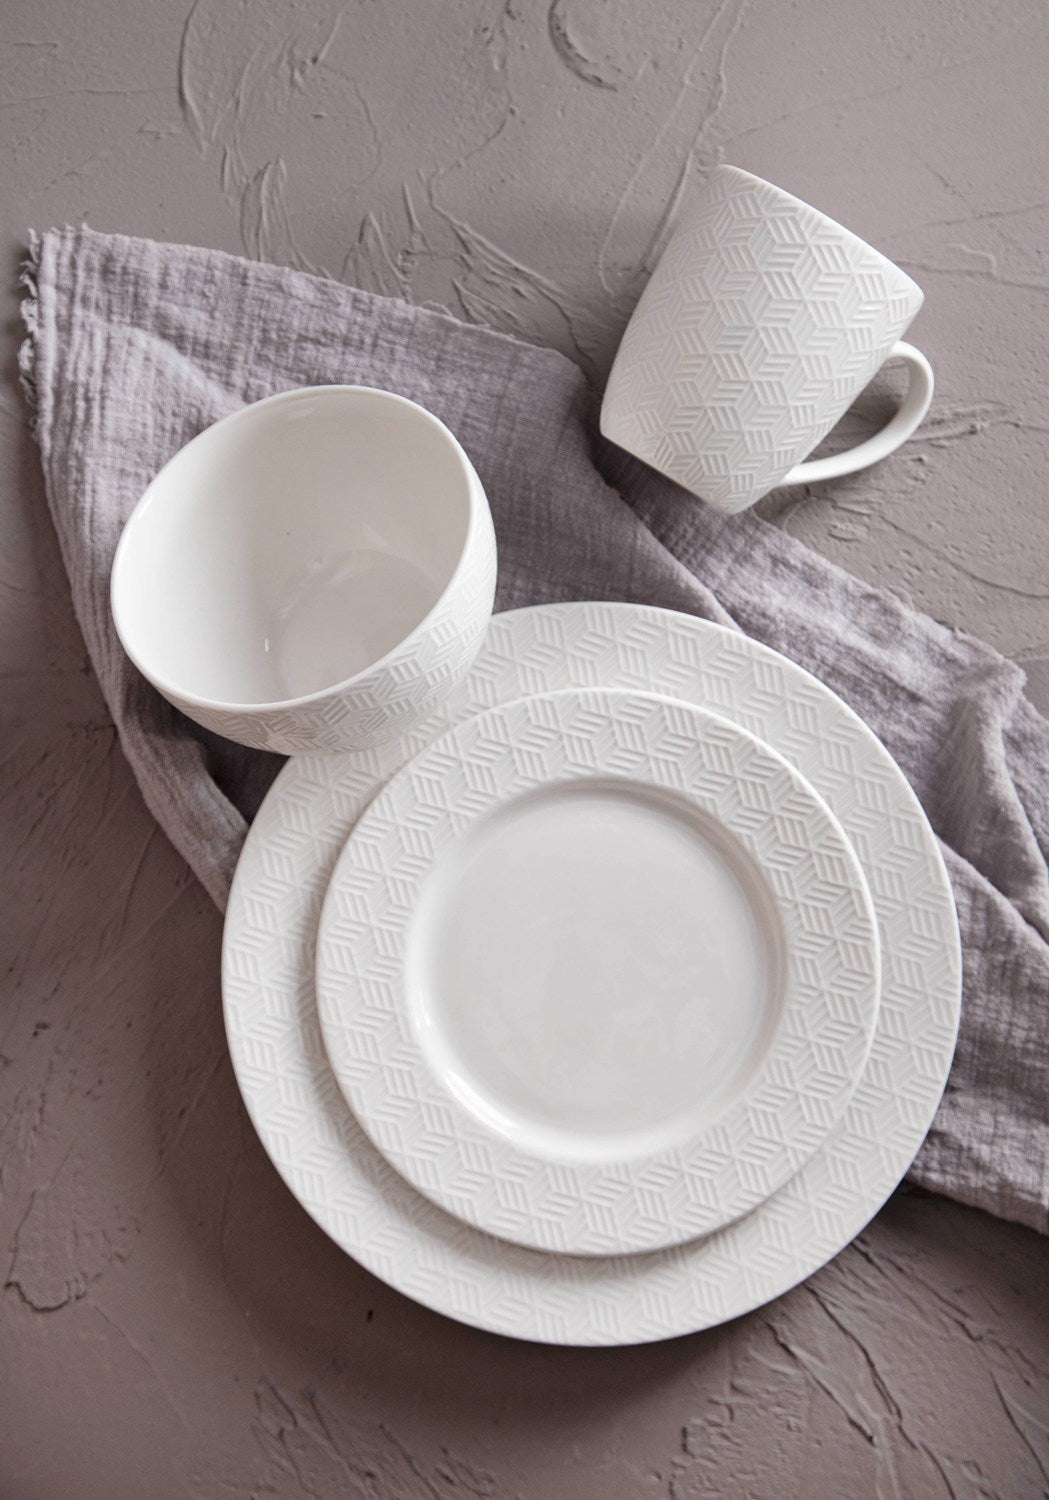 Plant and geometric embossed dinnerware sets | Item NO.: 33C-015